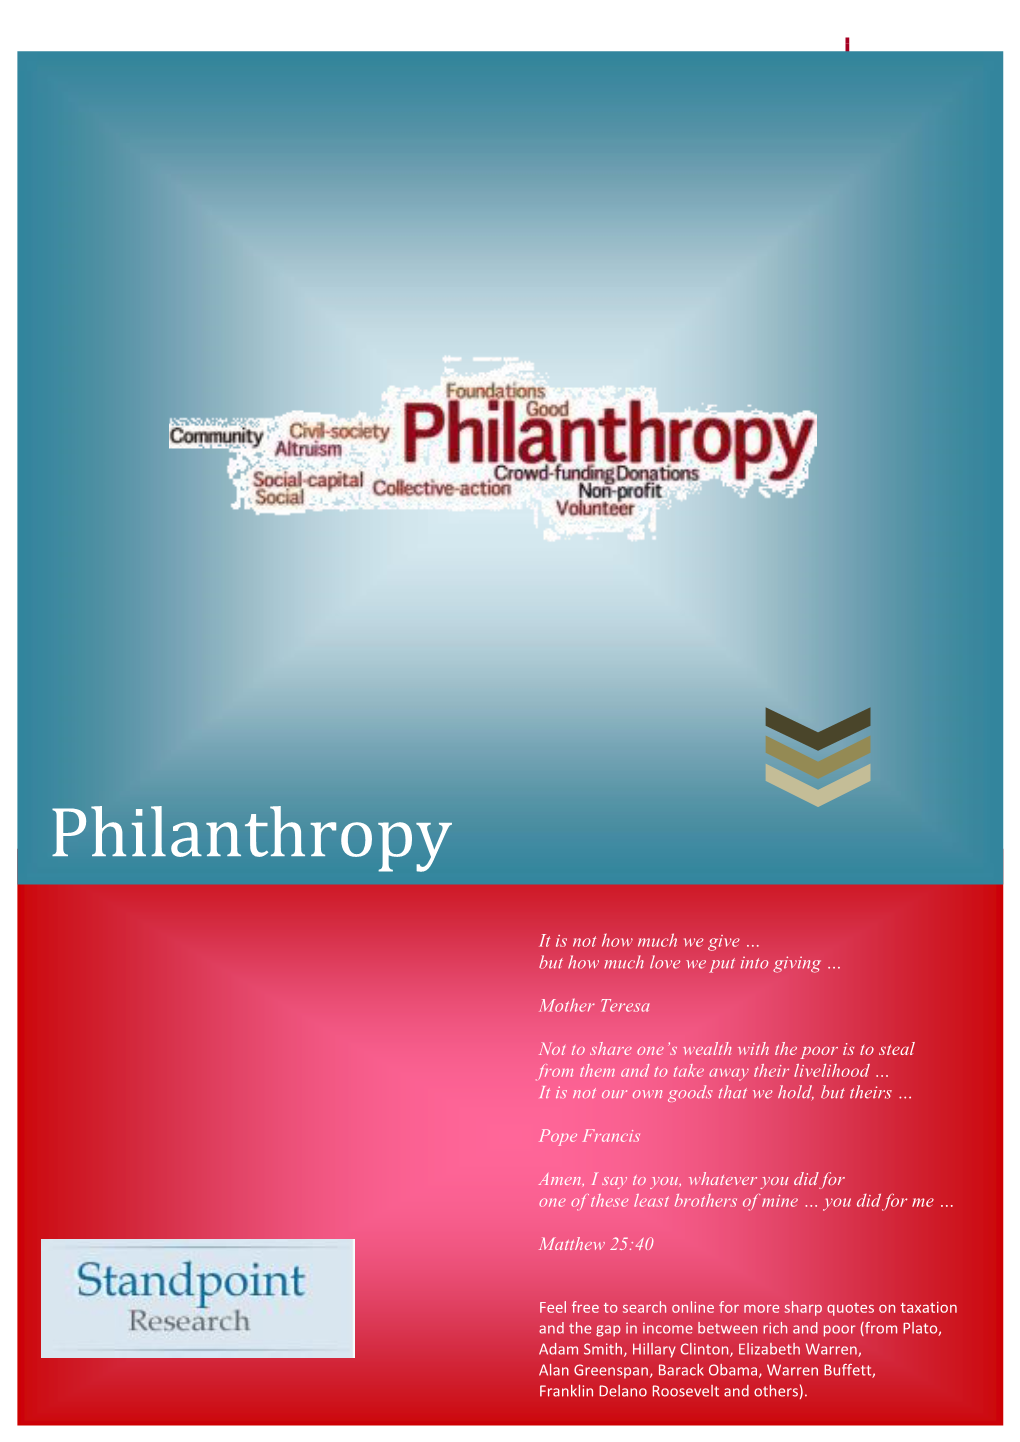 Philanthropy and Philosophy